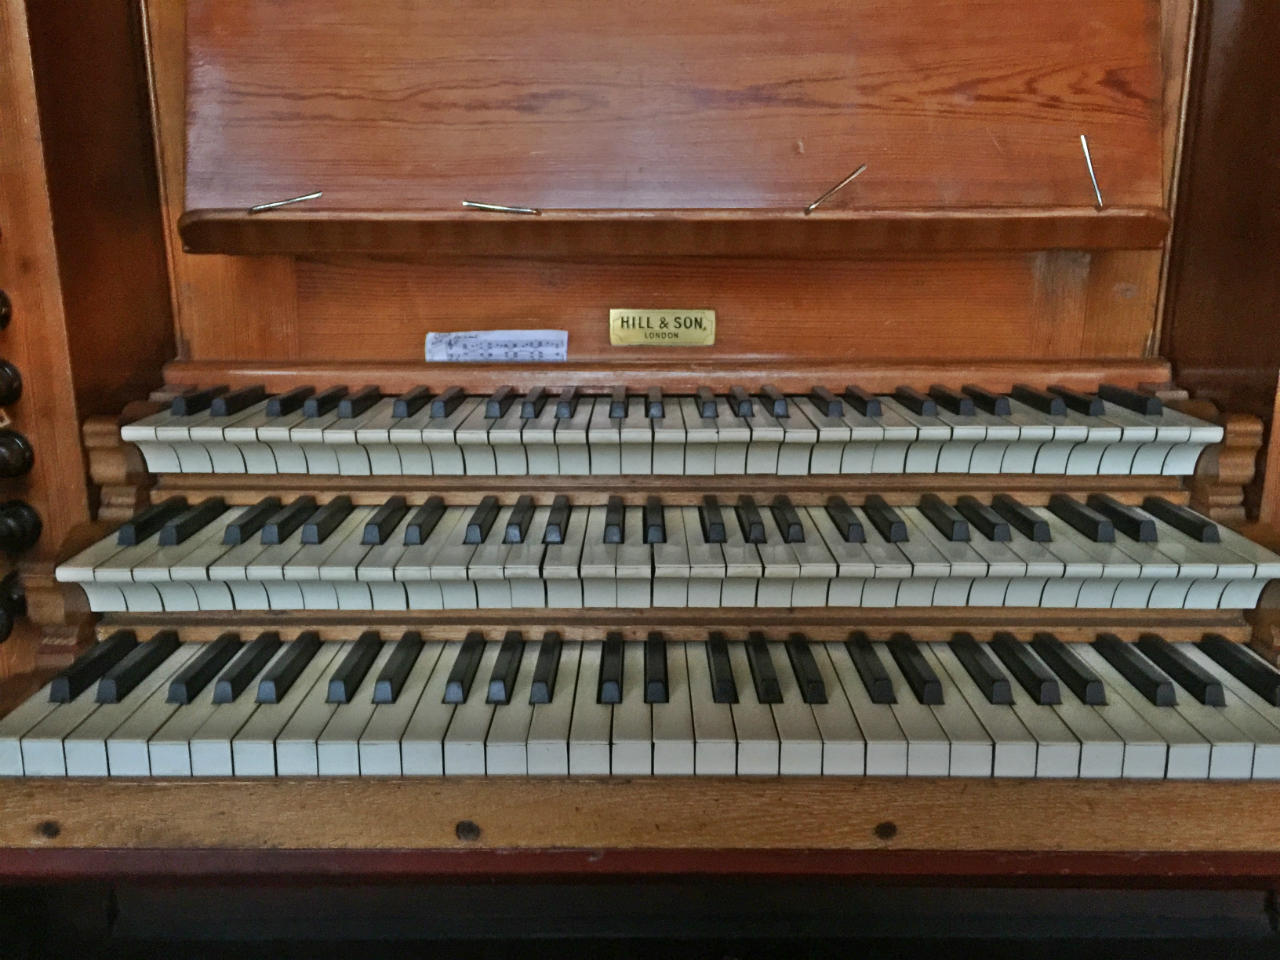 St Germans organ keyboard